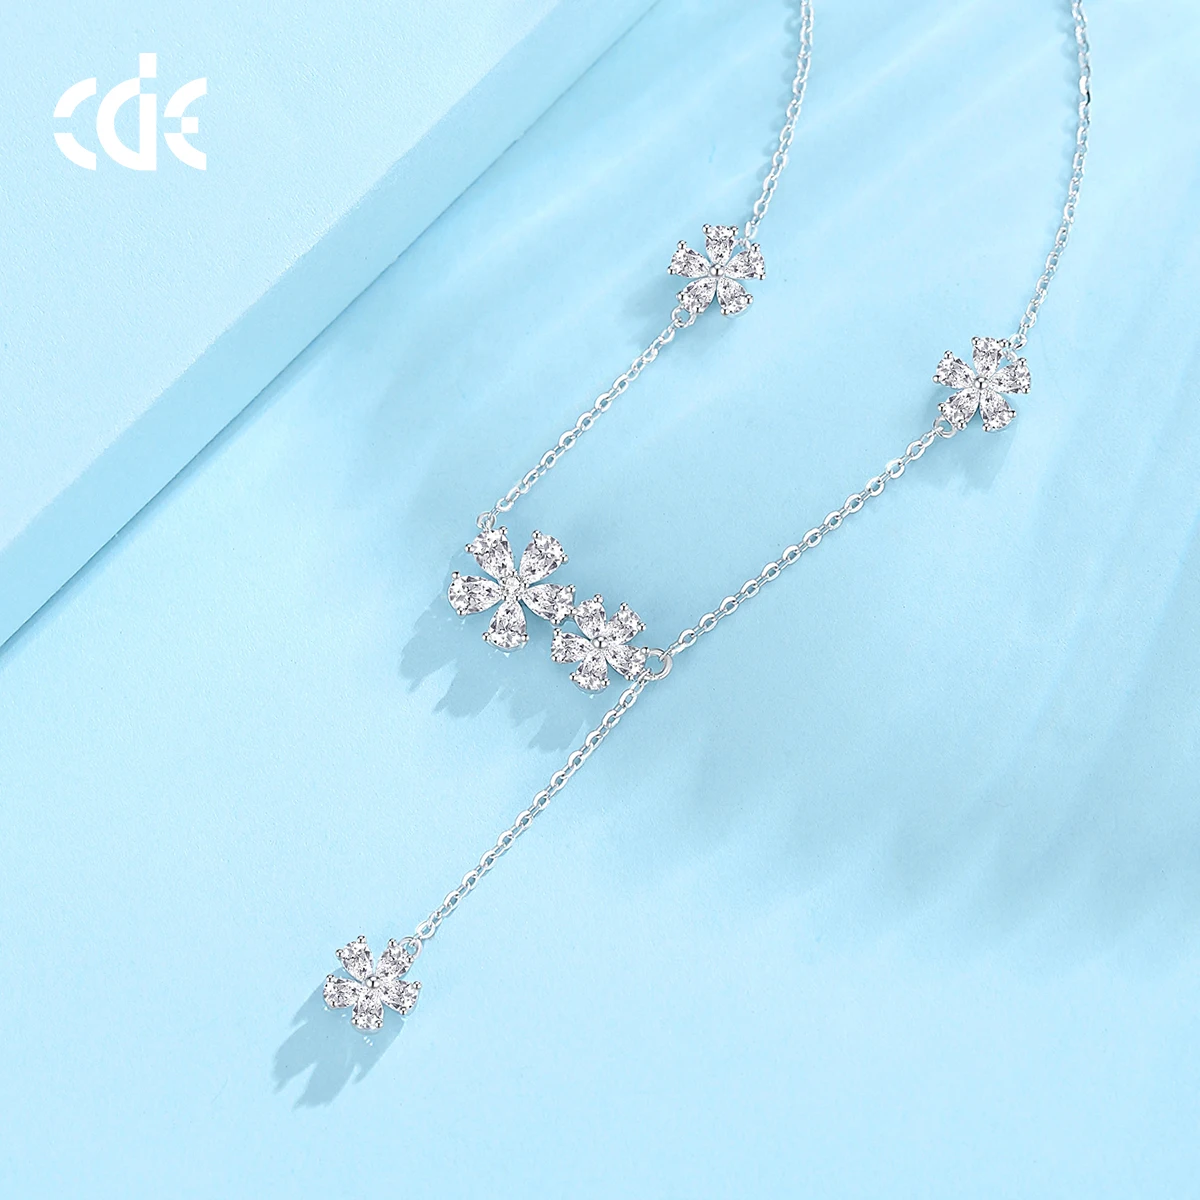 CDE CZYN056 925 Sterling Silver Necklace Fine Jewelry For Women Rhodium Plated Zircon Flower Shape Pendant Necklace